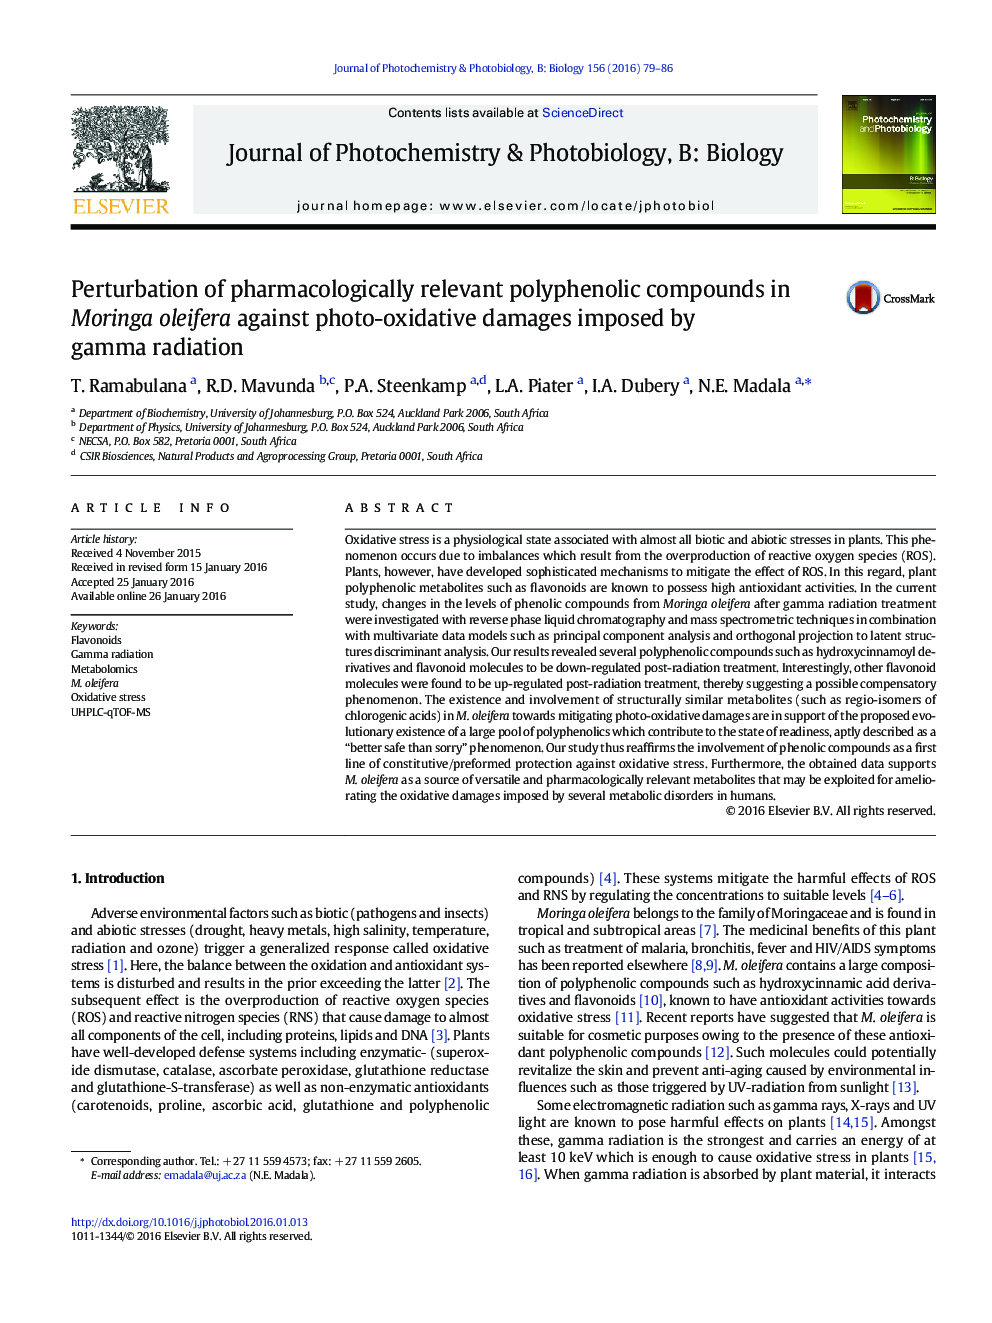 Perturbation of pharmacologically relevant polyphenolic compounds in Moringa oleifera against photo-oxidative damages imposed by gamma radiation